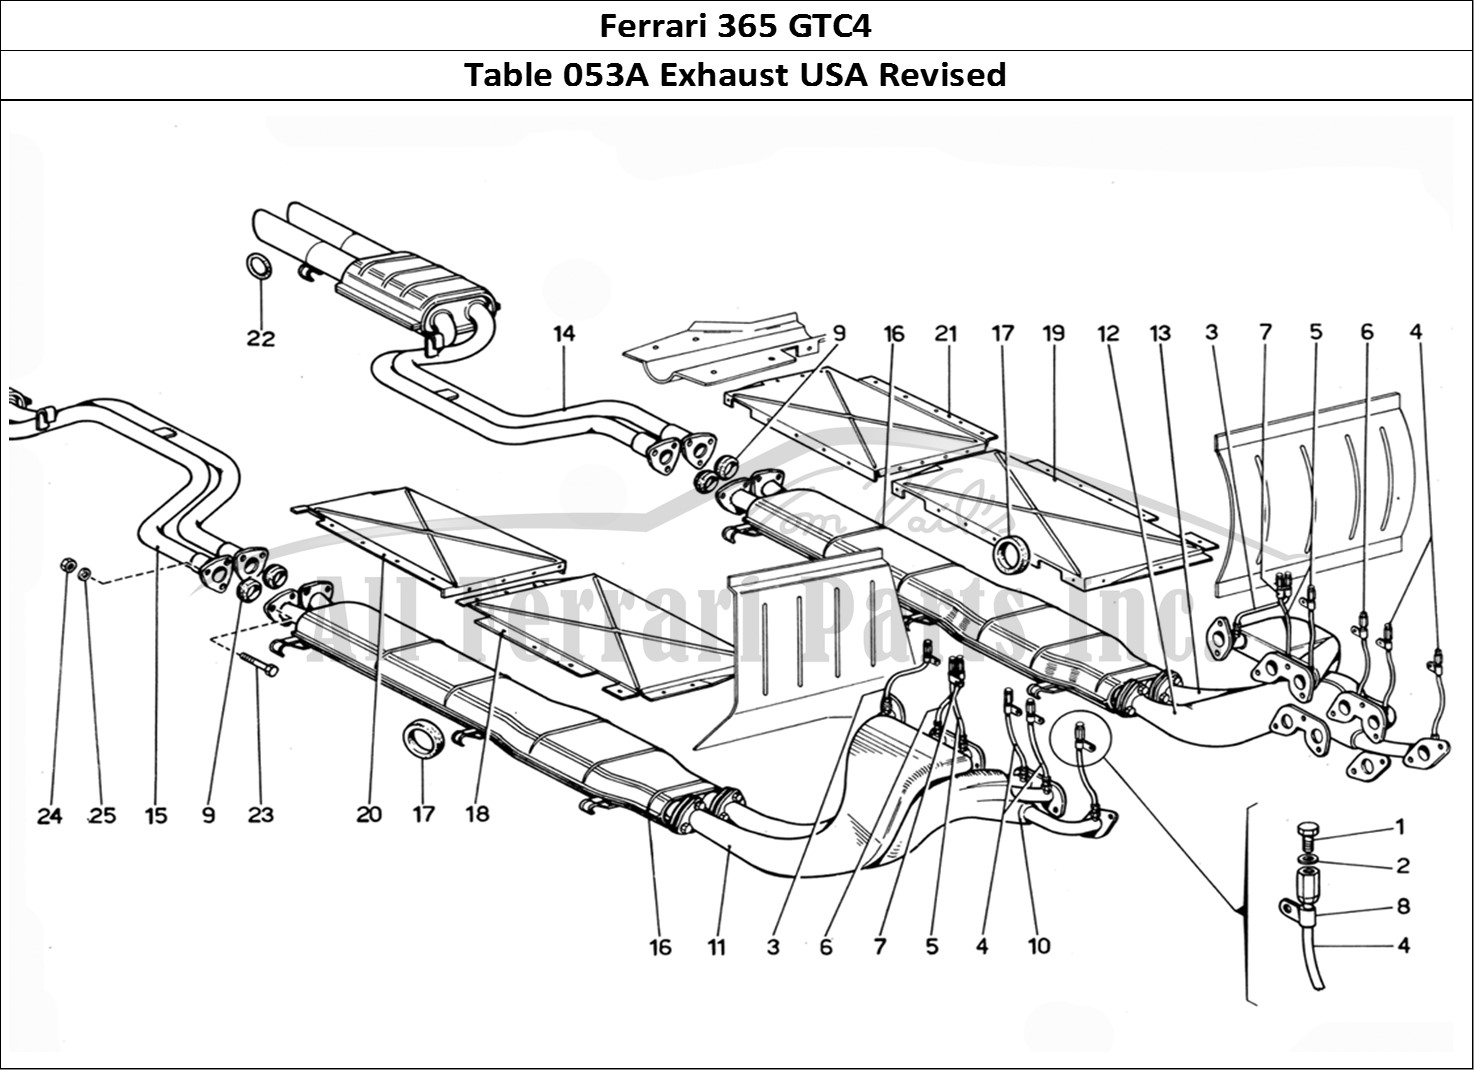 Ferrari Parts Ferrari 365 GTC4 (Mechanical) Page 053 USA Exhaust- Revision